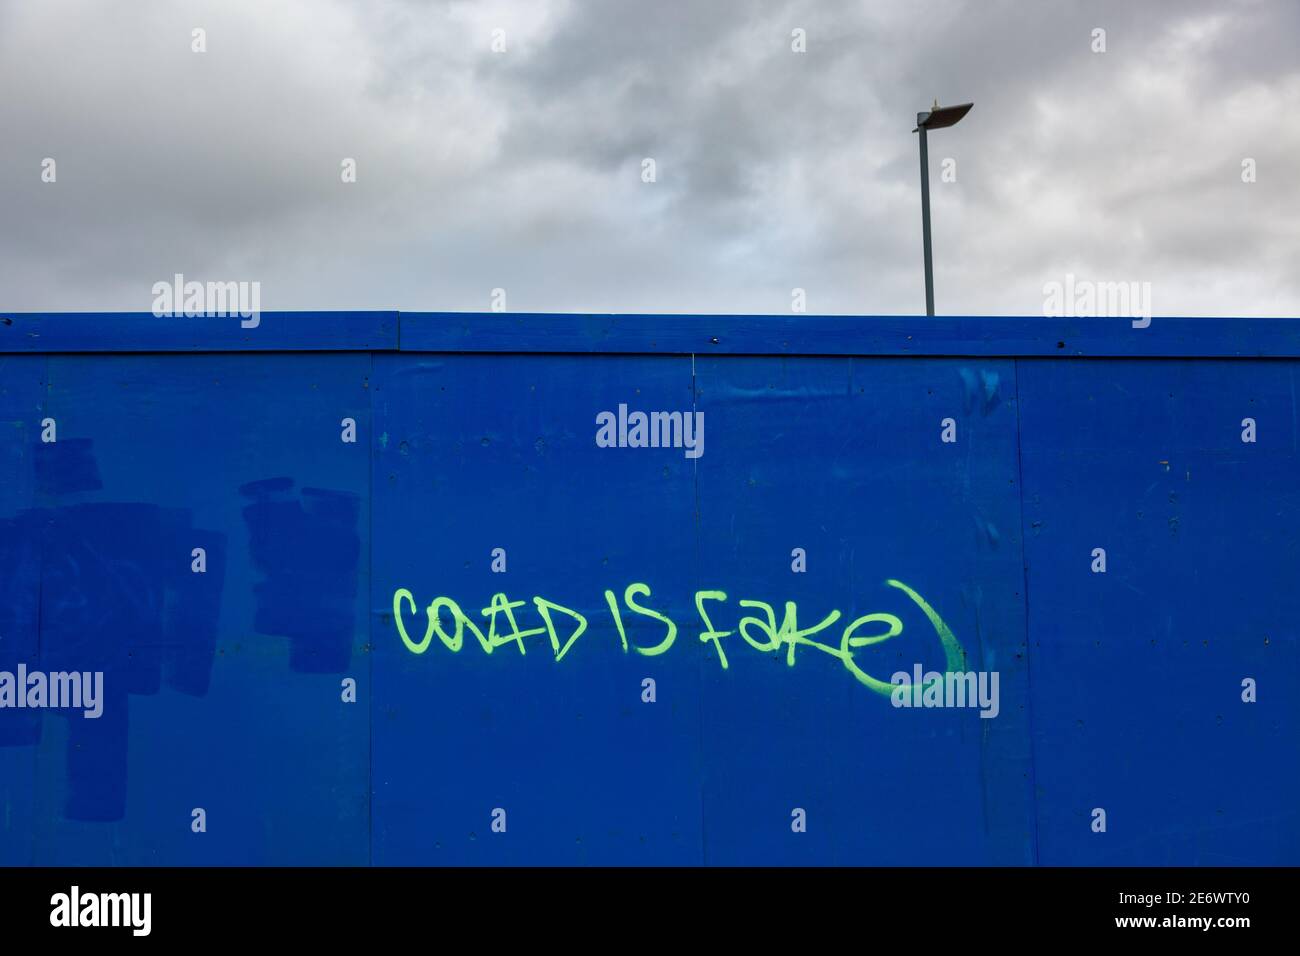 Covid is fake grafitti on a hoarding, 2021 Stock Photo